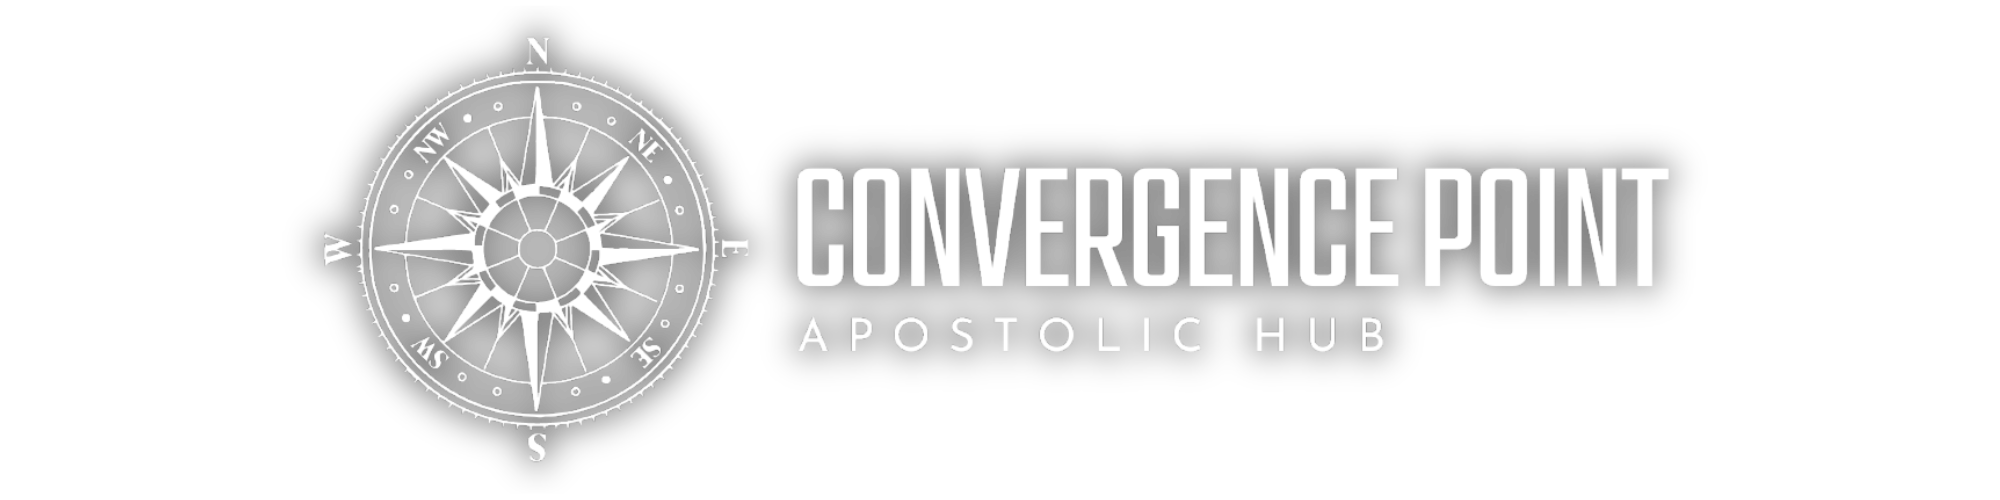 Convergence Point Apostolic Hub